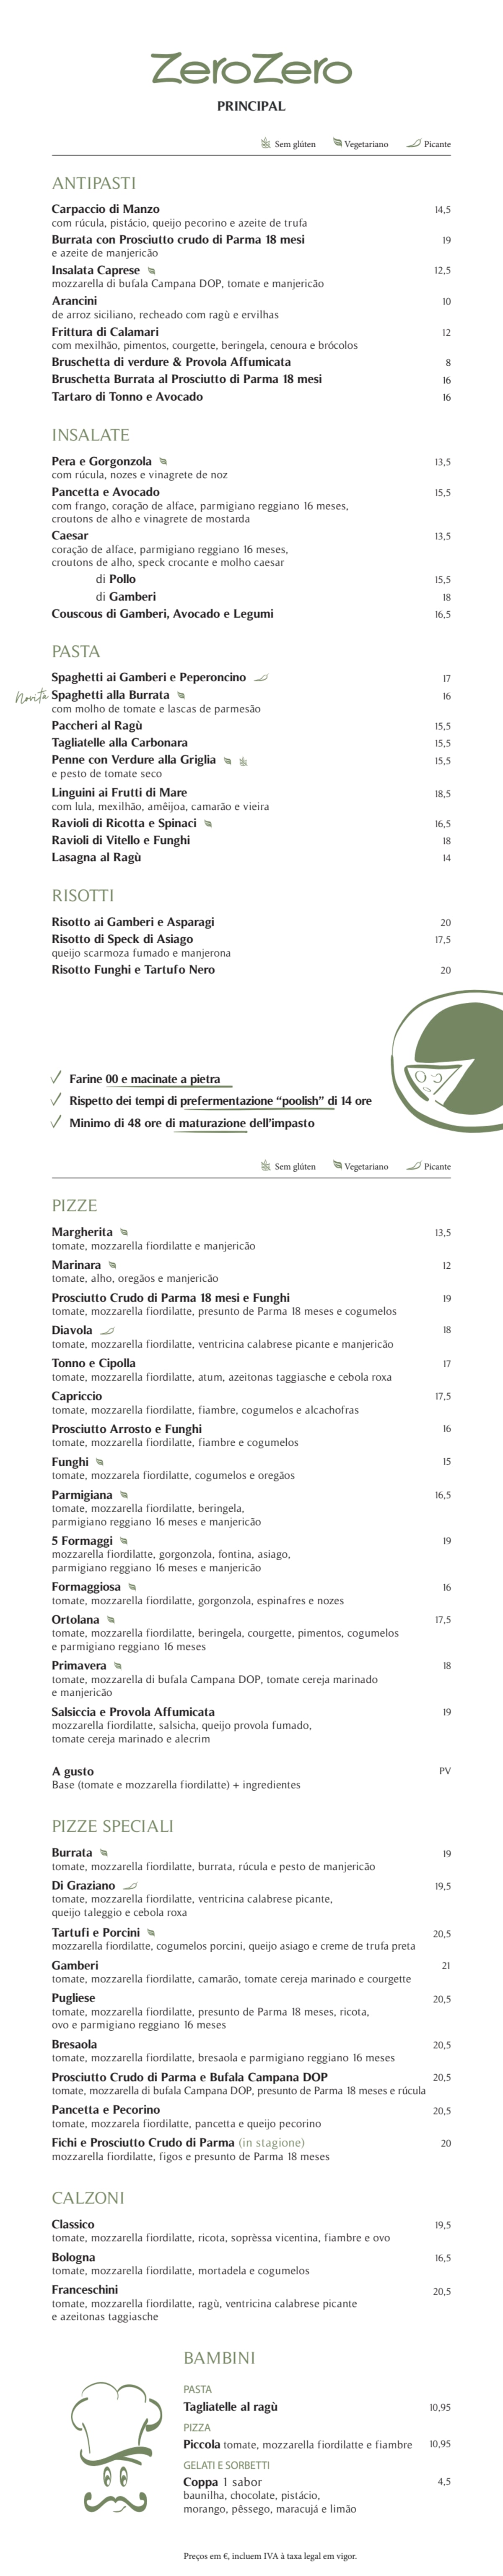 ZeroZero Principe Real menu